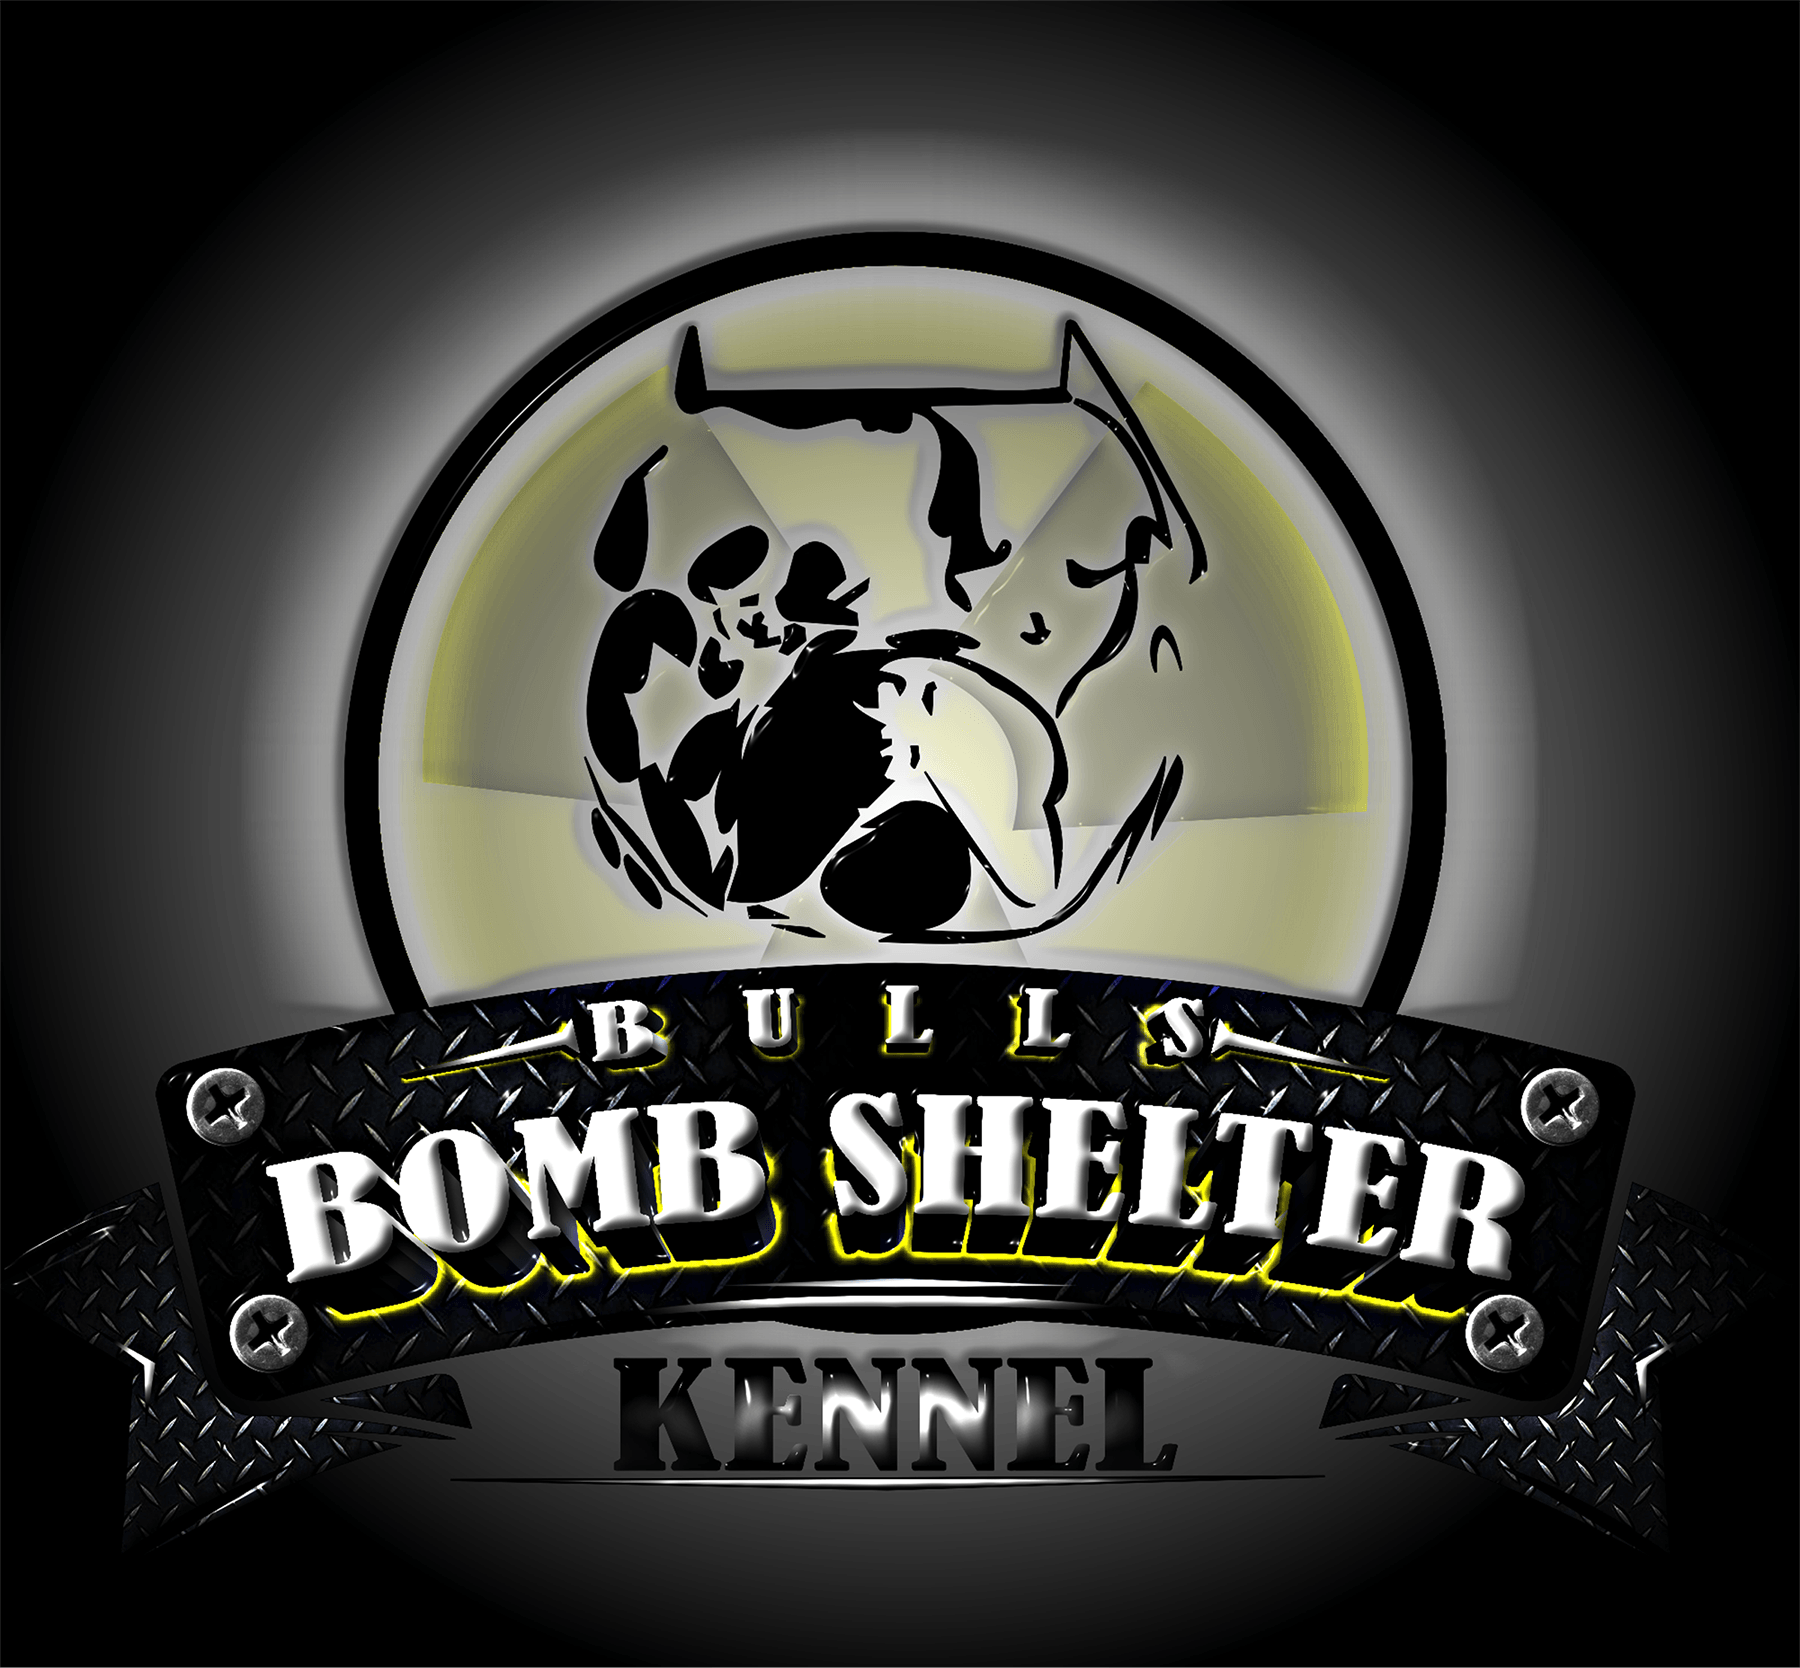 Bomb Shelter Logo - Bulls Bomb Shelter logo. American Bully Graphics. Bullying, Bomb